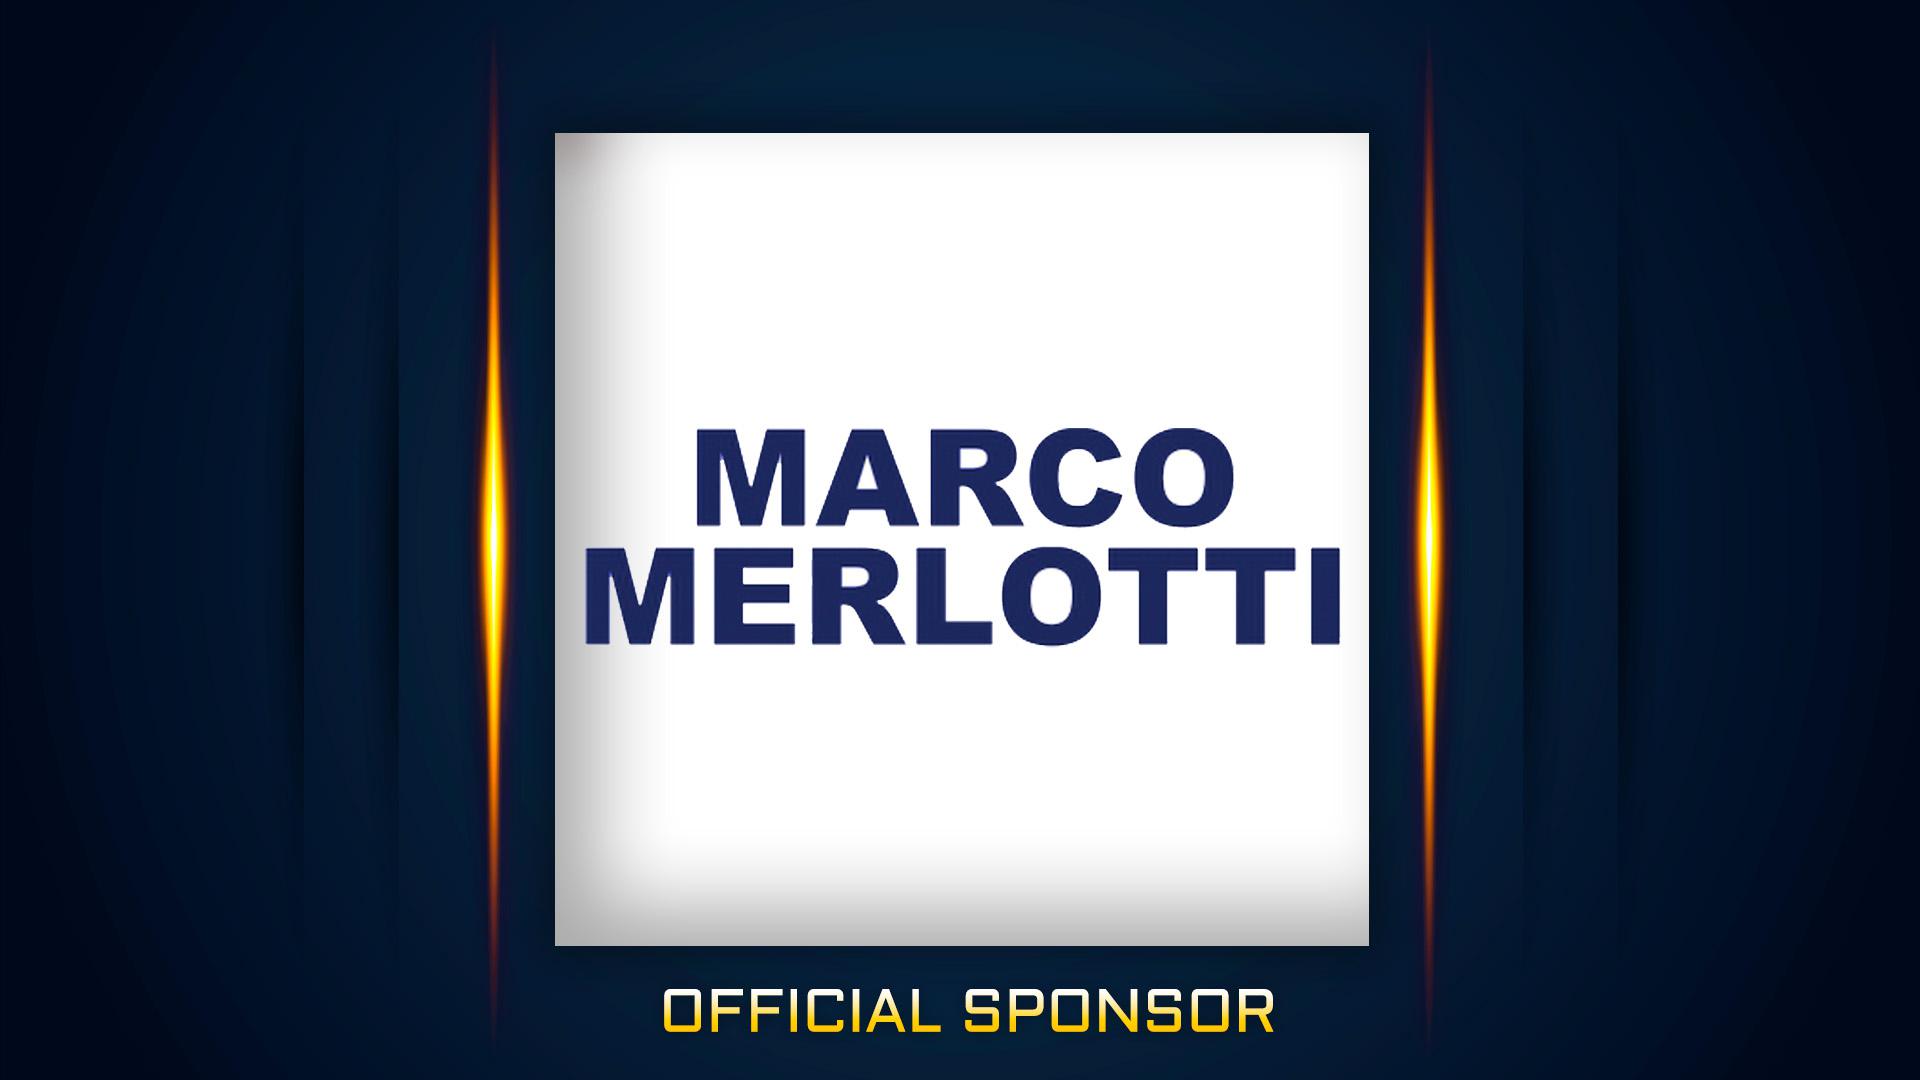 Marco Merlotti